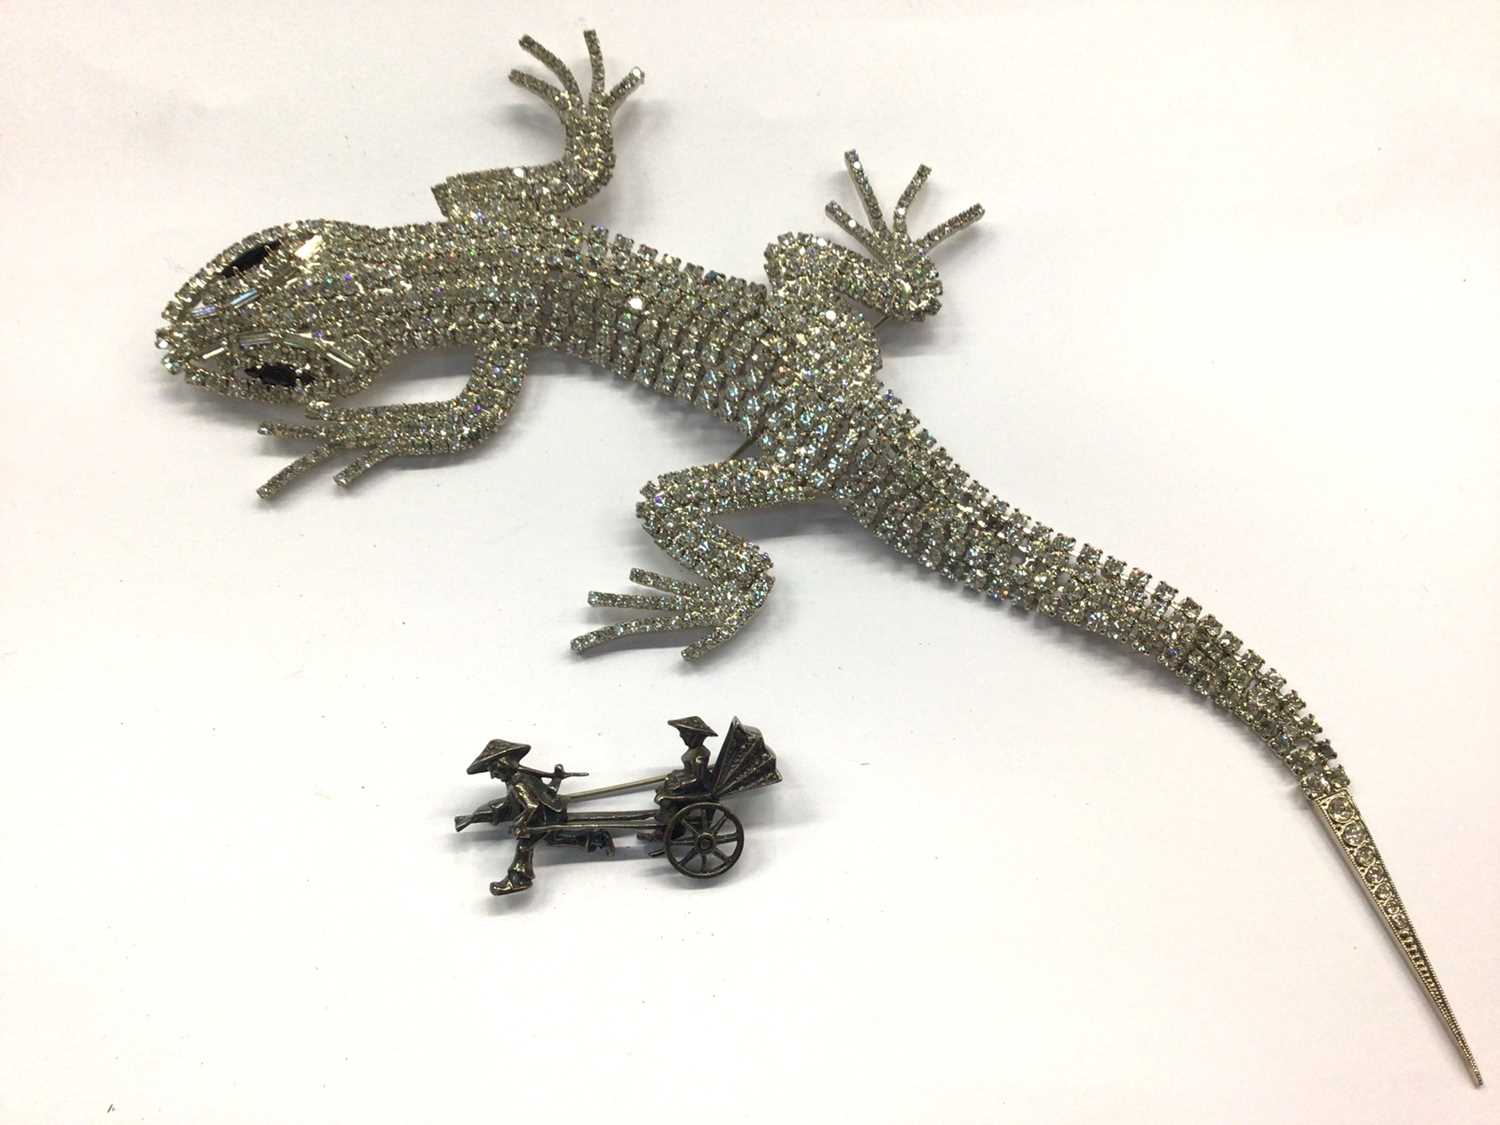 1980s Butler & Wilson paste set lizard brooch and silver Rickshaw brooch (2)